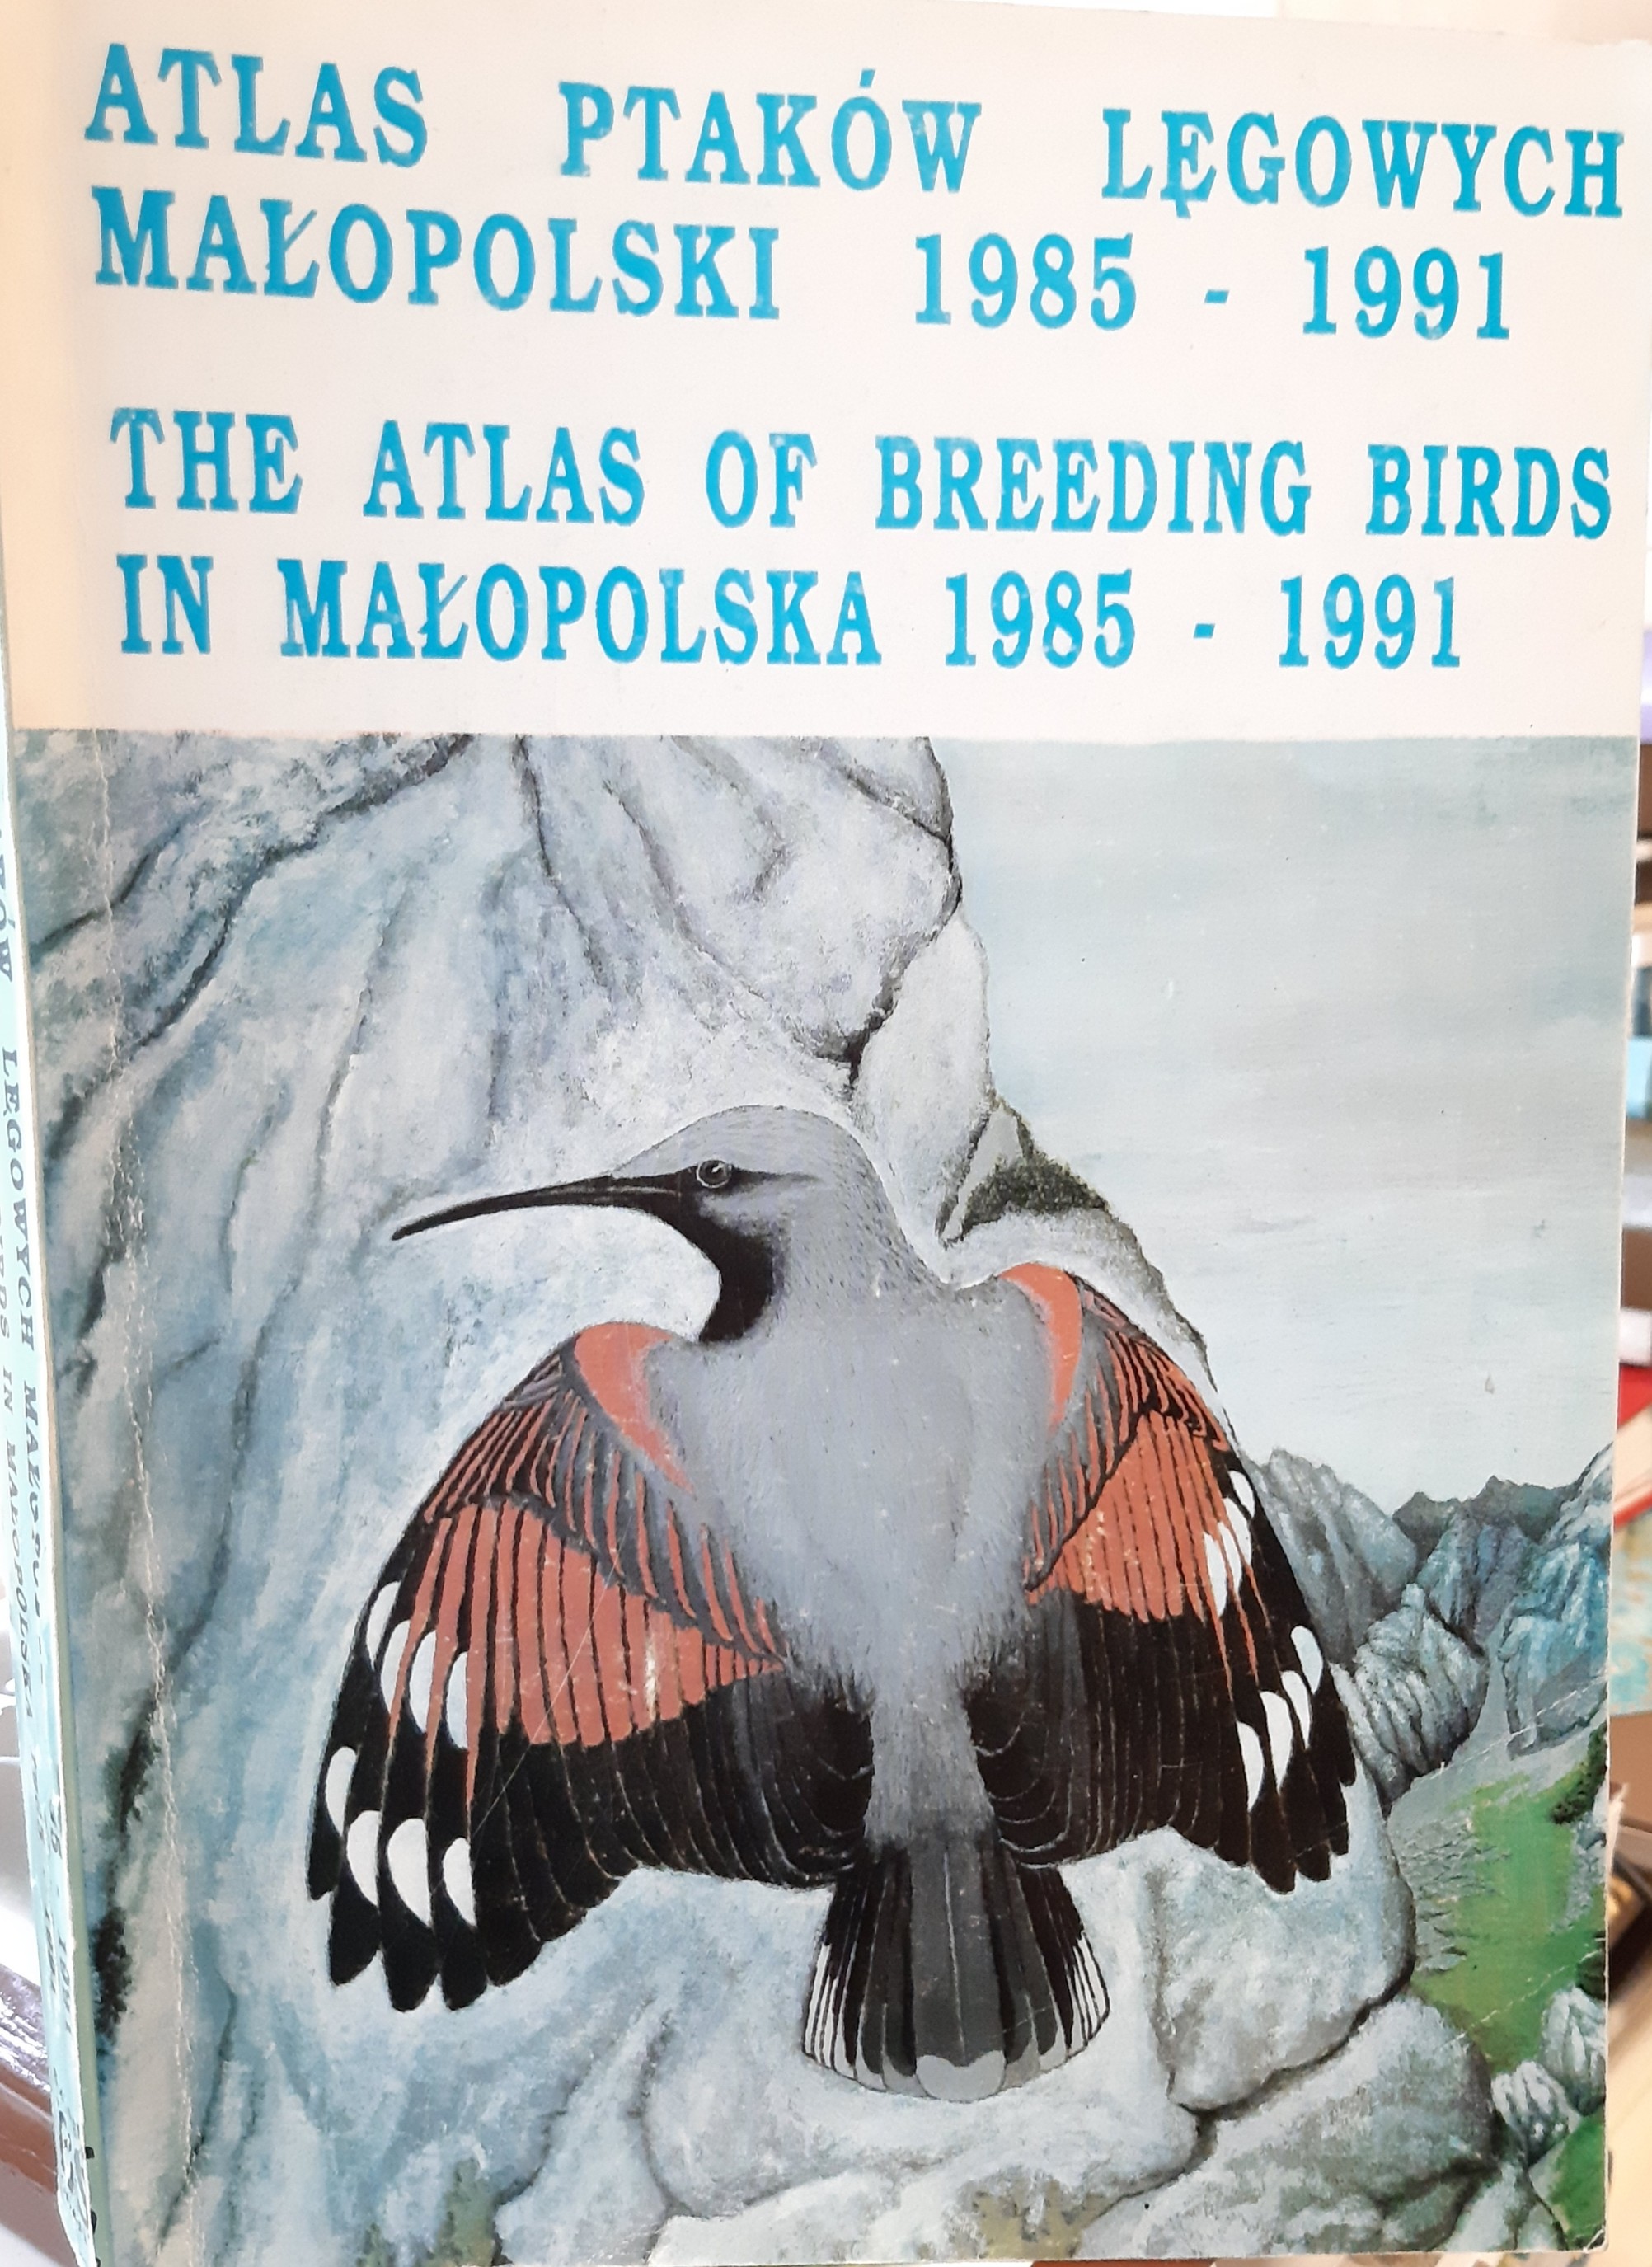 The Atlas of Breeding Birds in Małopolska 1985-1991 (south-eastern Poland) (Rippl-Rónai Múzeum CC BY-NC-ND)